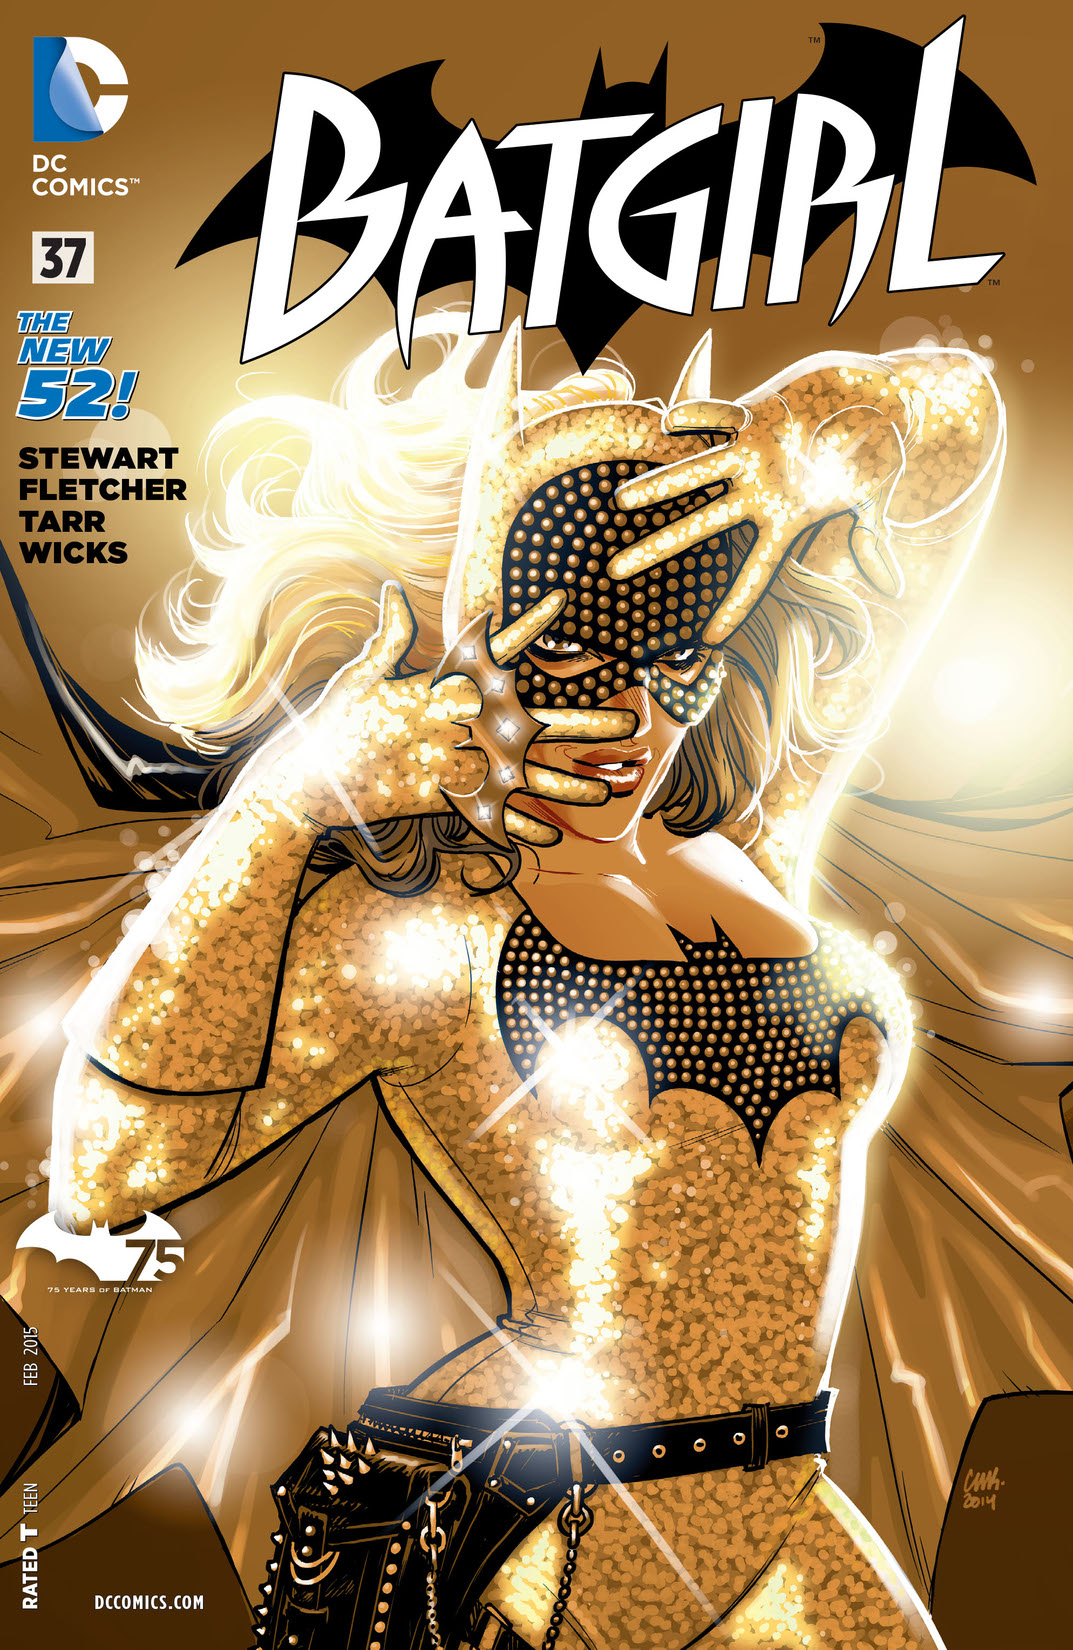 Batgirl (2011-) #37 preview images